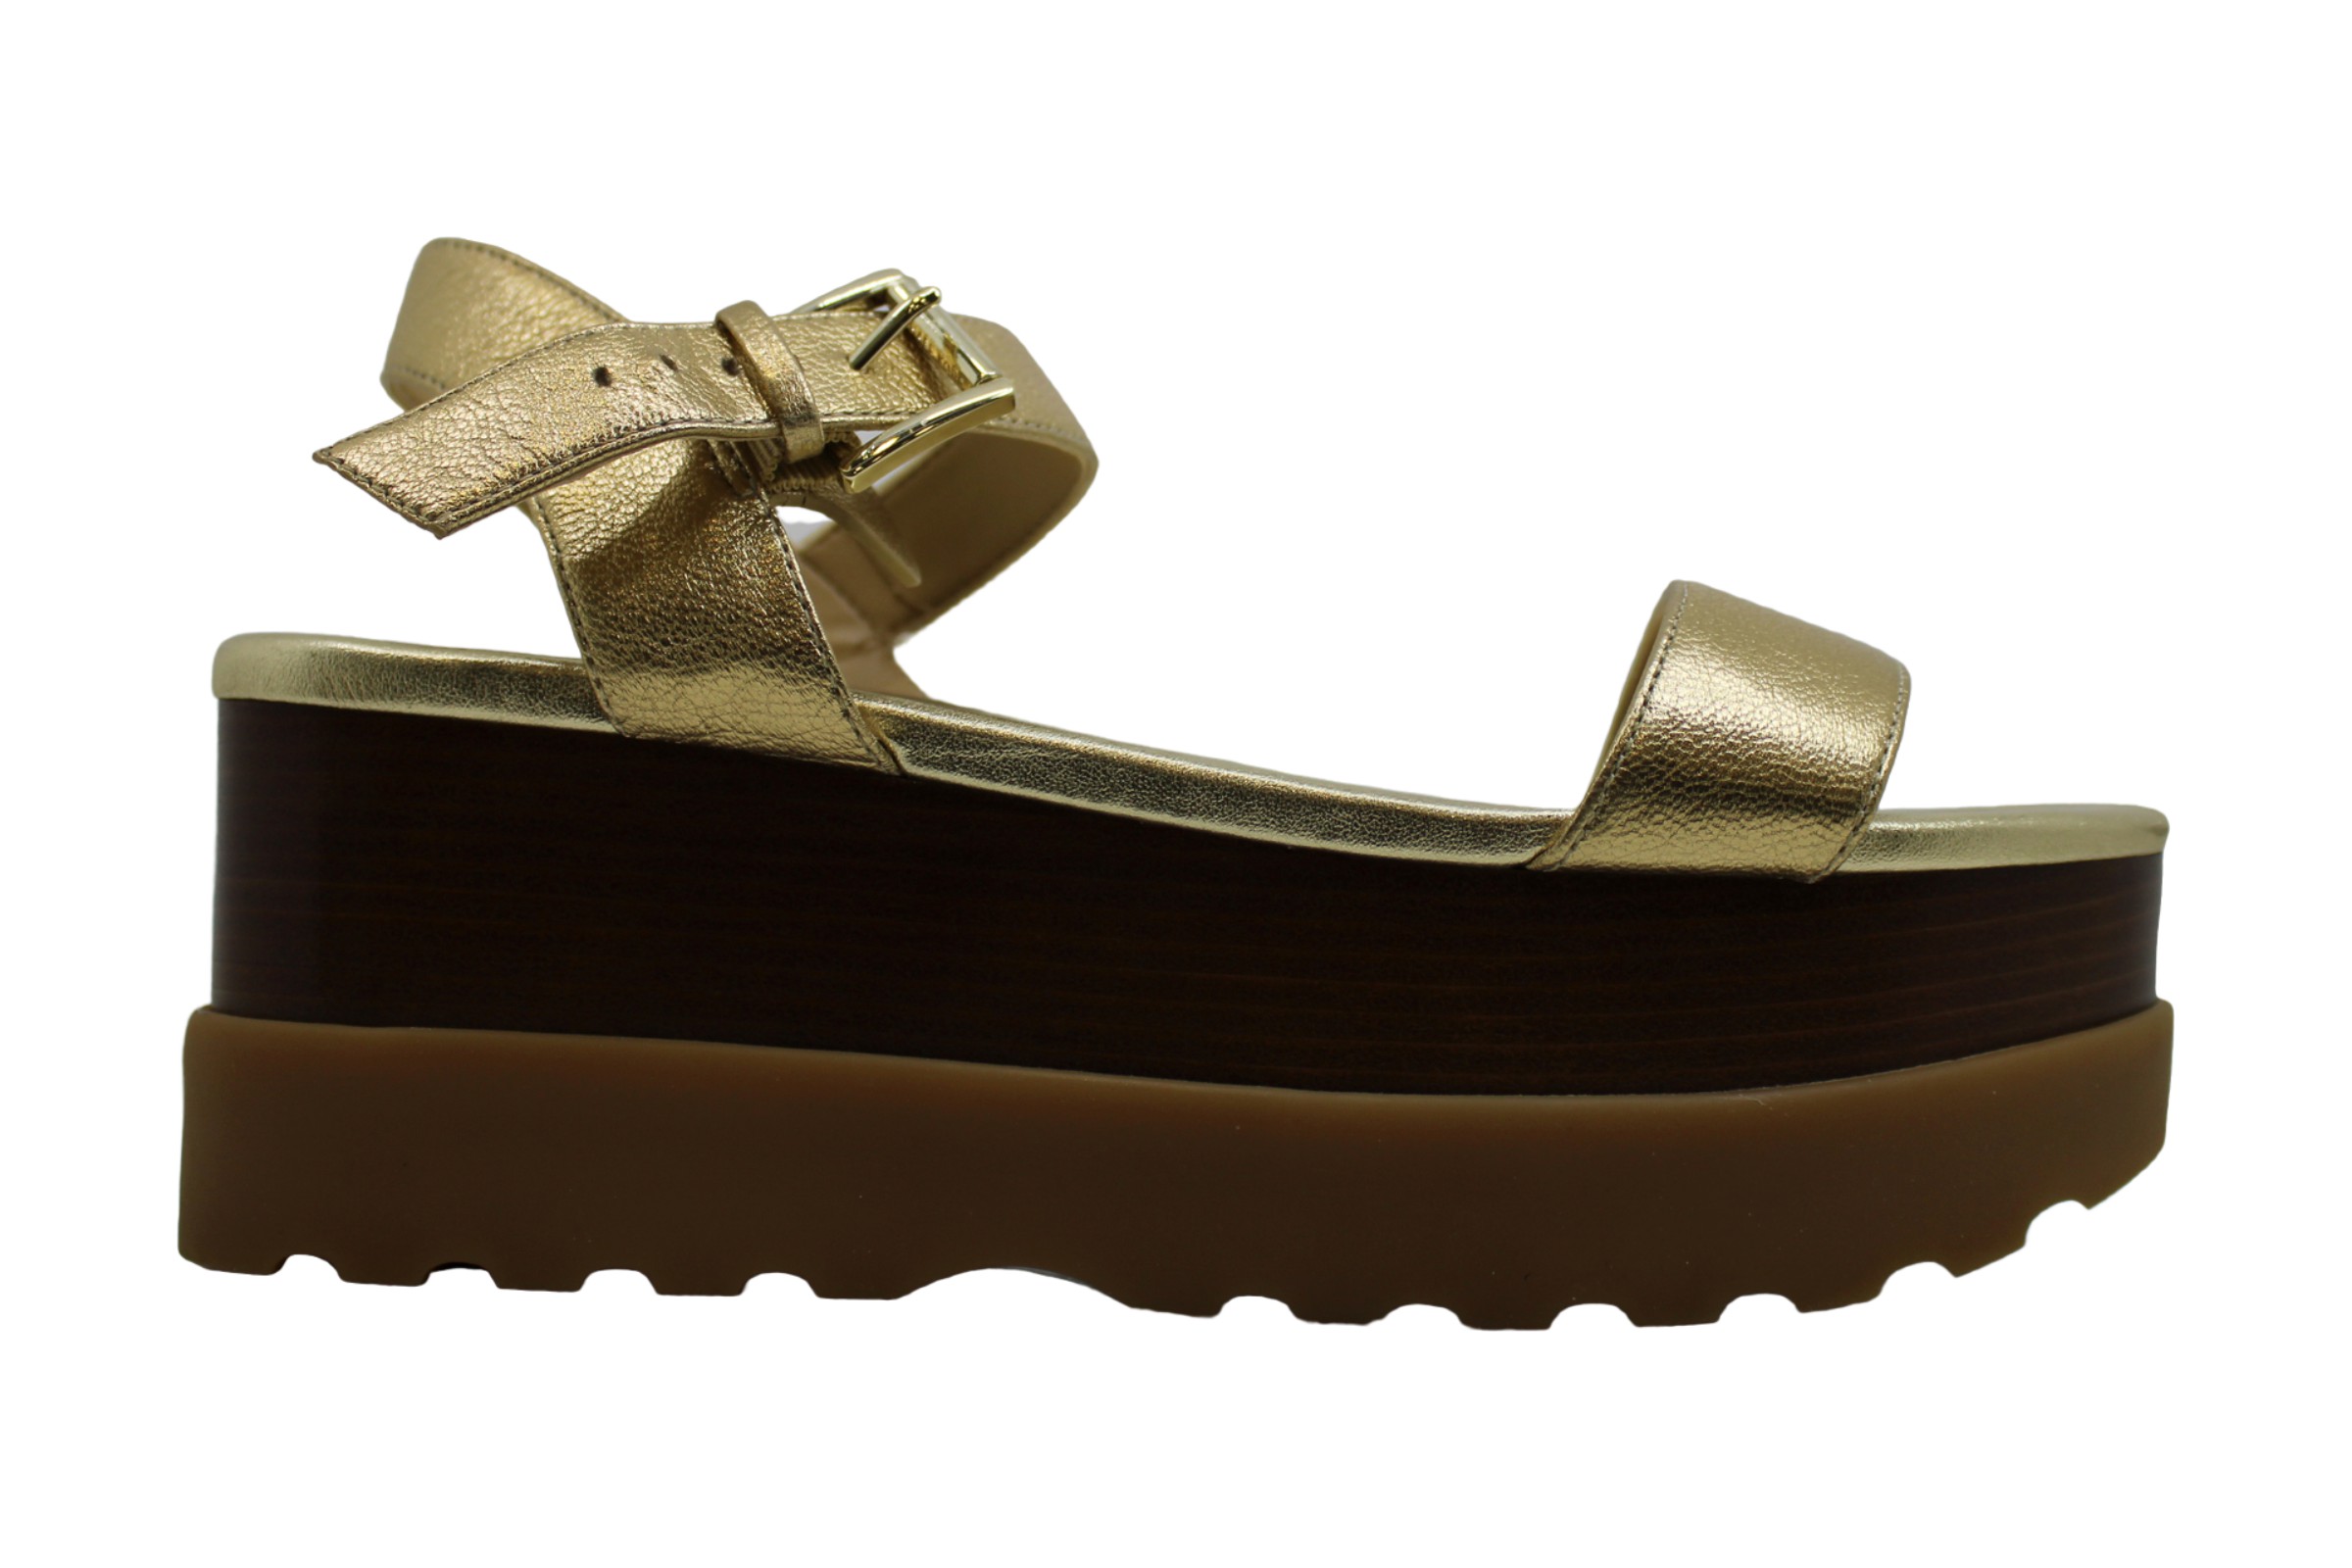 Michael Kors Womens Platform Sandals in Gold Color, Size 8.5 MOA ...